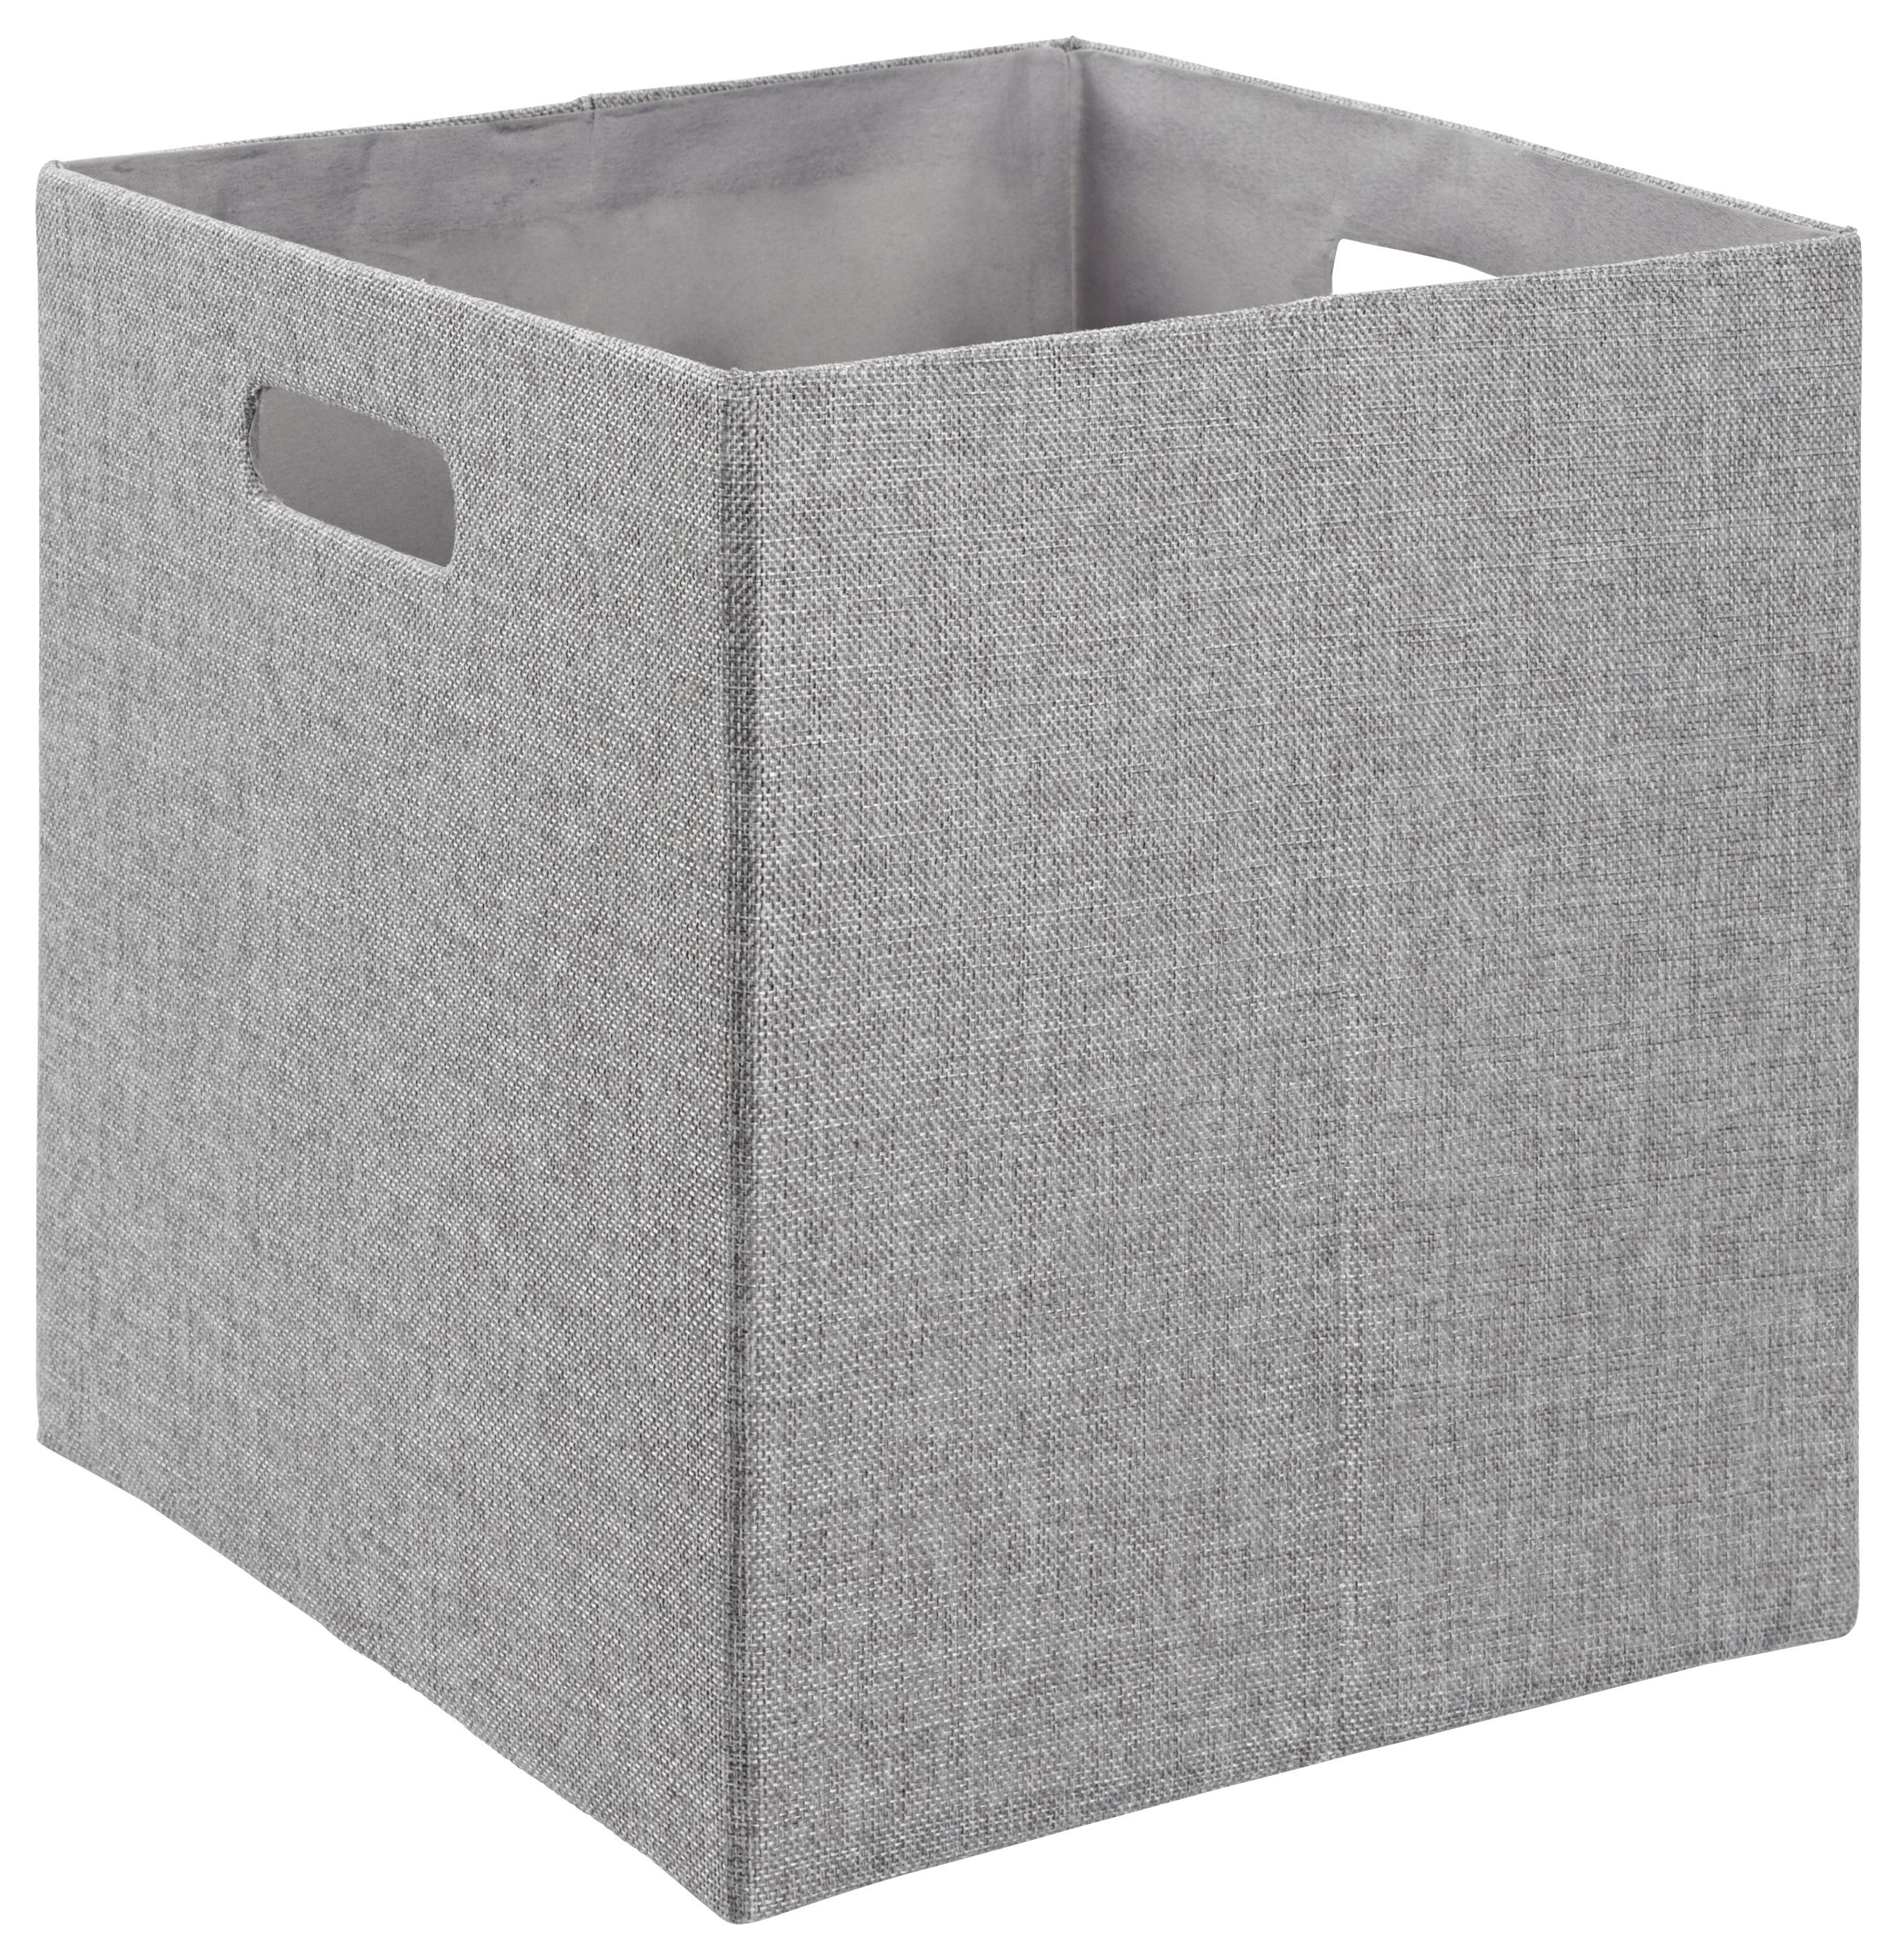 Faltbox Bobby in Grau ca. 33x33x32cm - Grau, MODERN, Papier/Kunststoff (33/33/32cm) - Modern Living